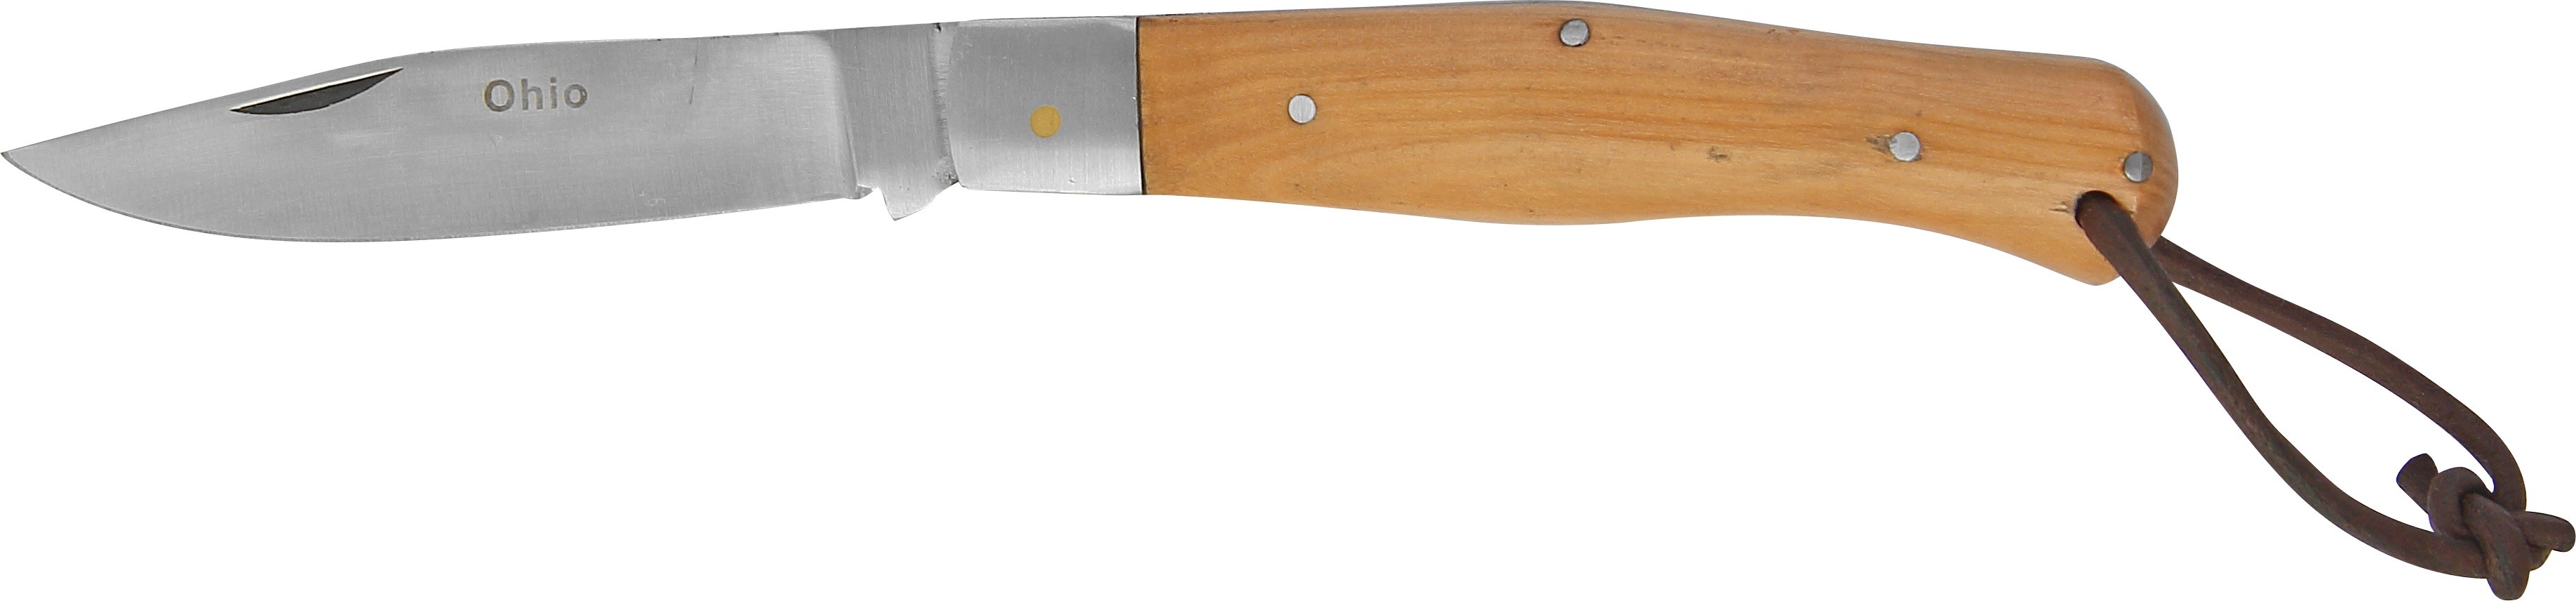 PE - Couteau OHIO du marin avec cordon - teck